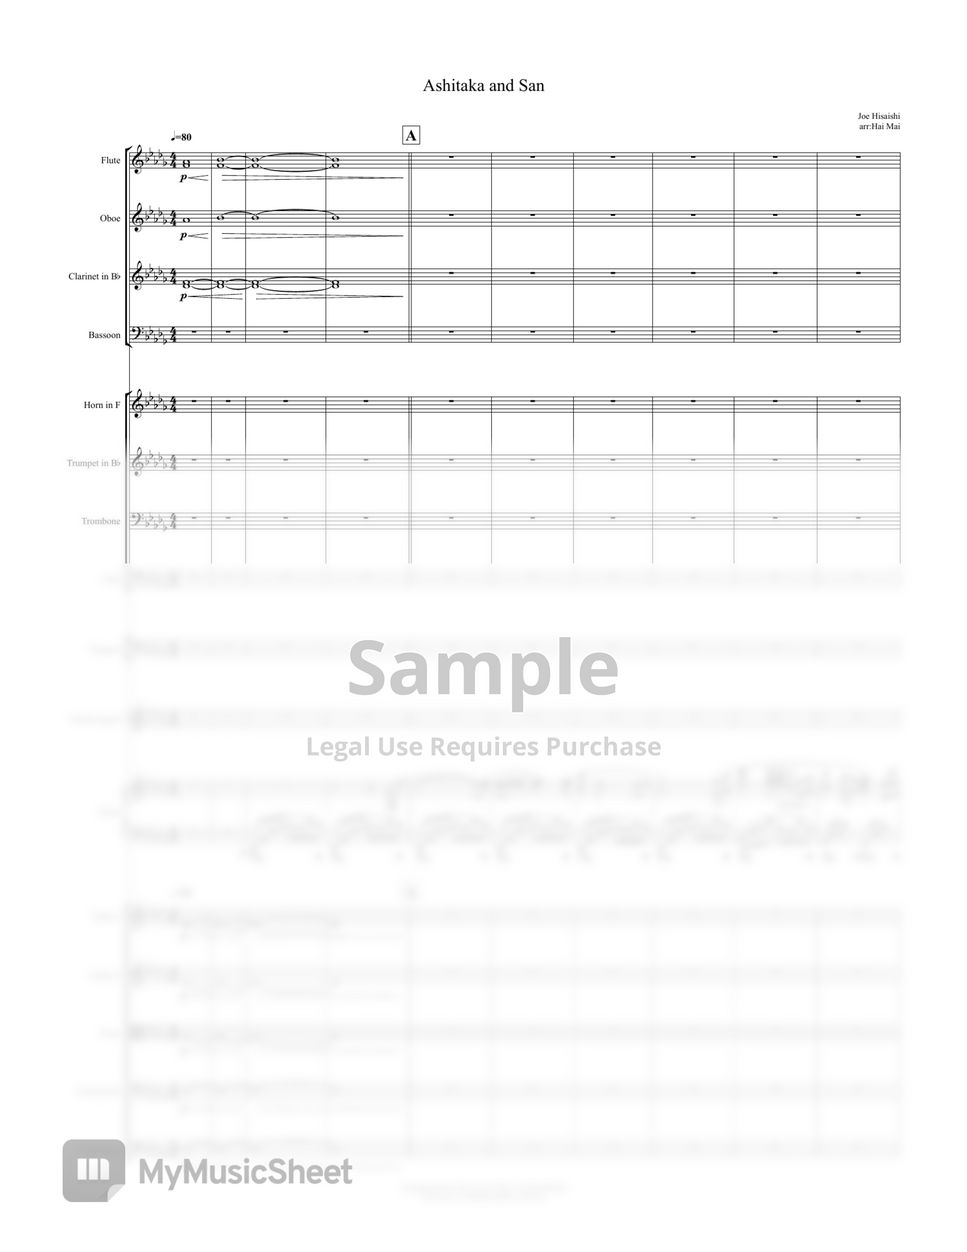 Joe Hisaishi - Ashitaka and San for Orchestra - Full Score by Hai Mai